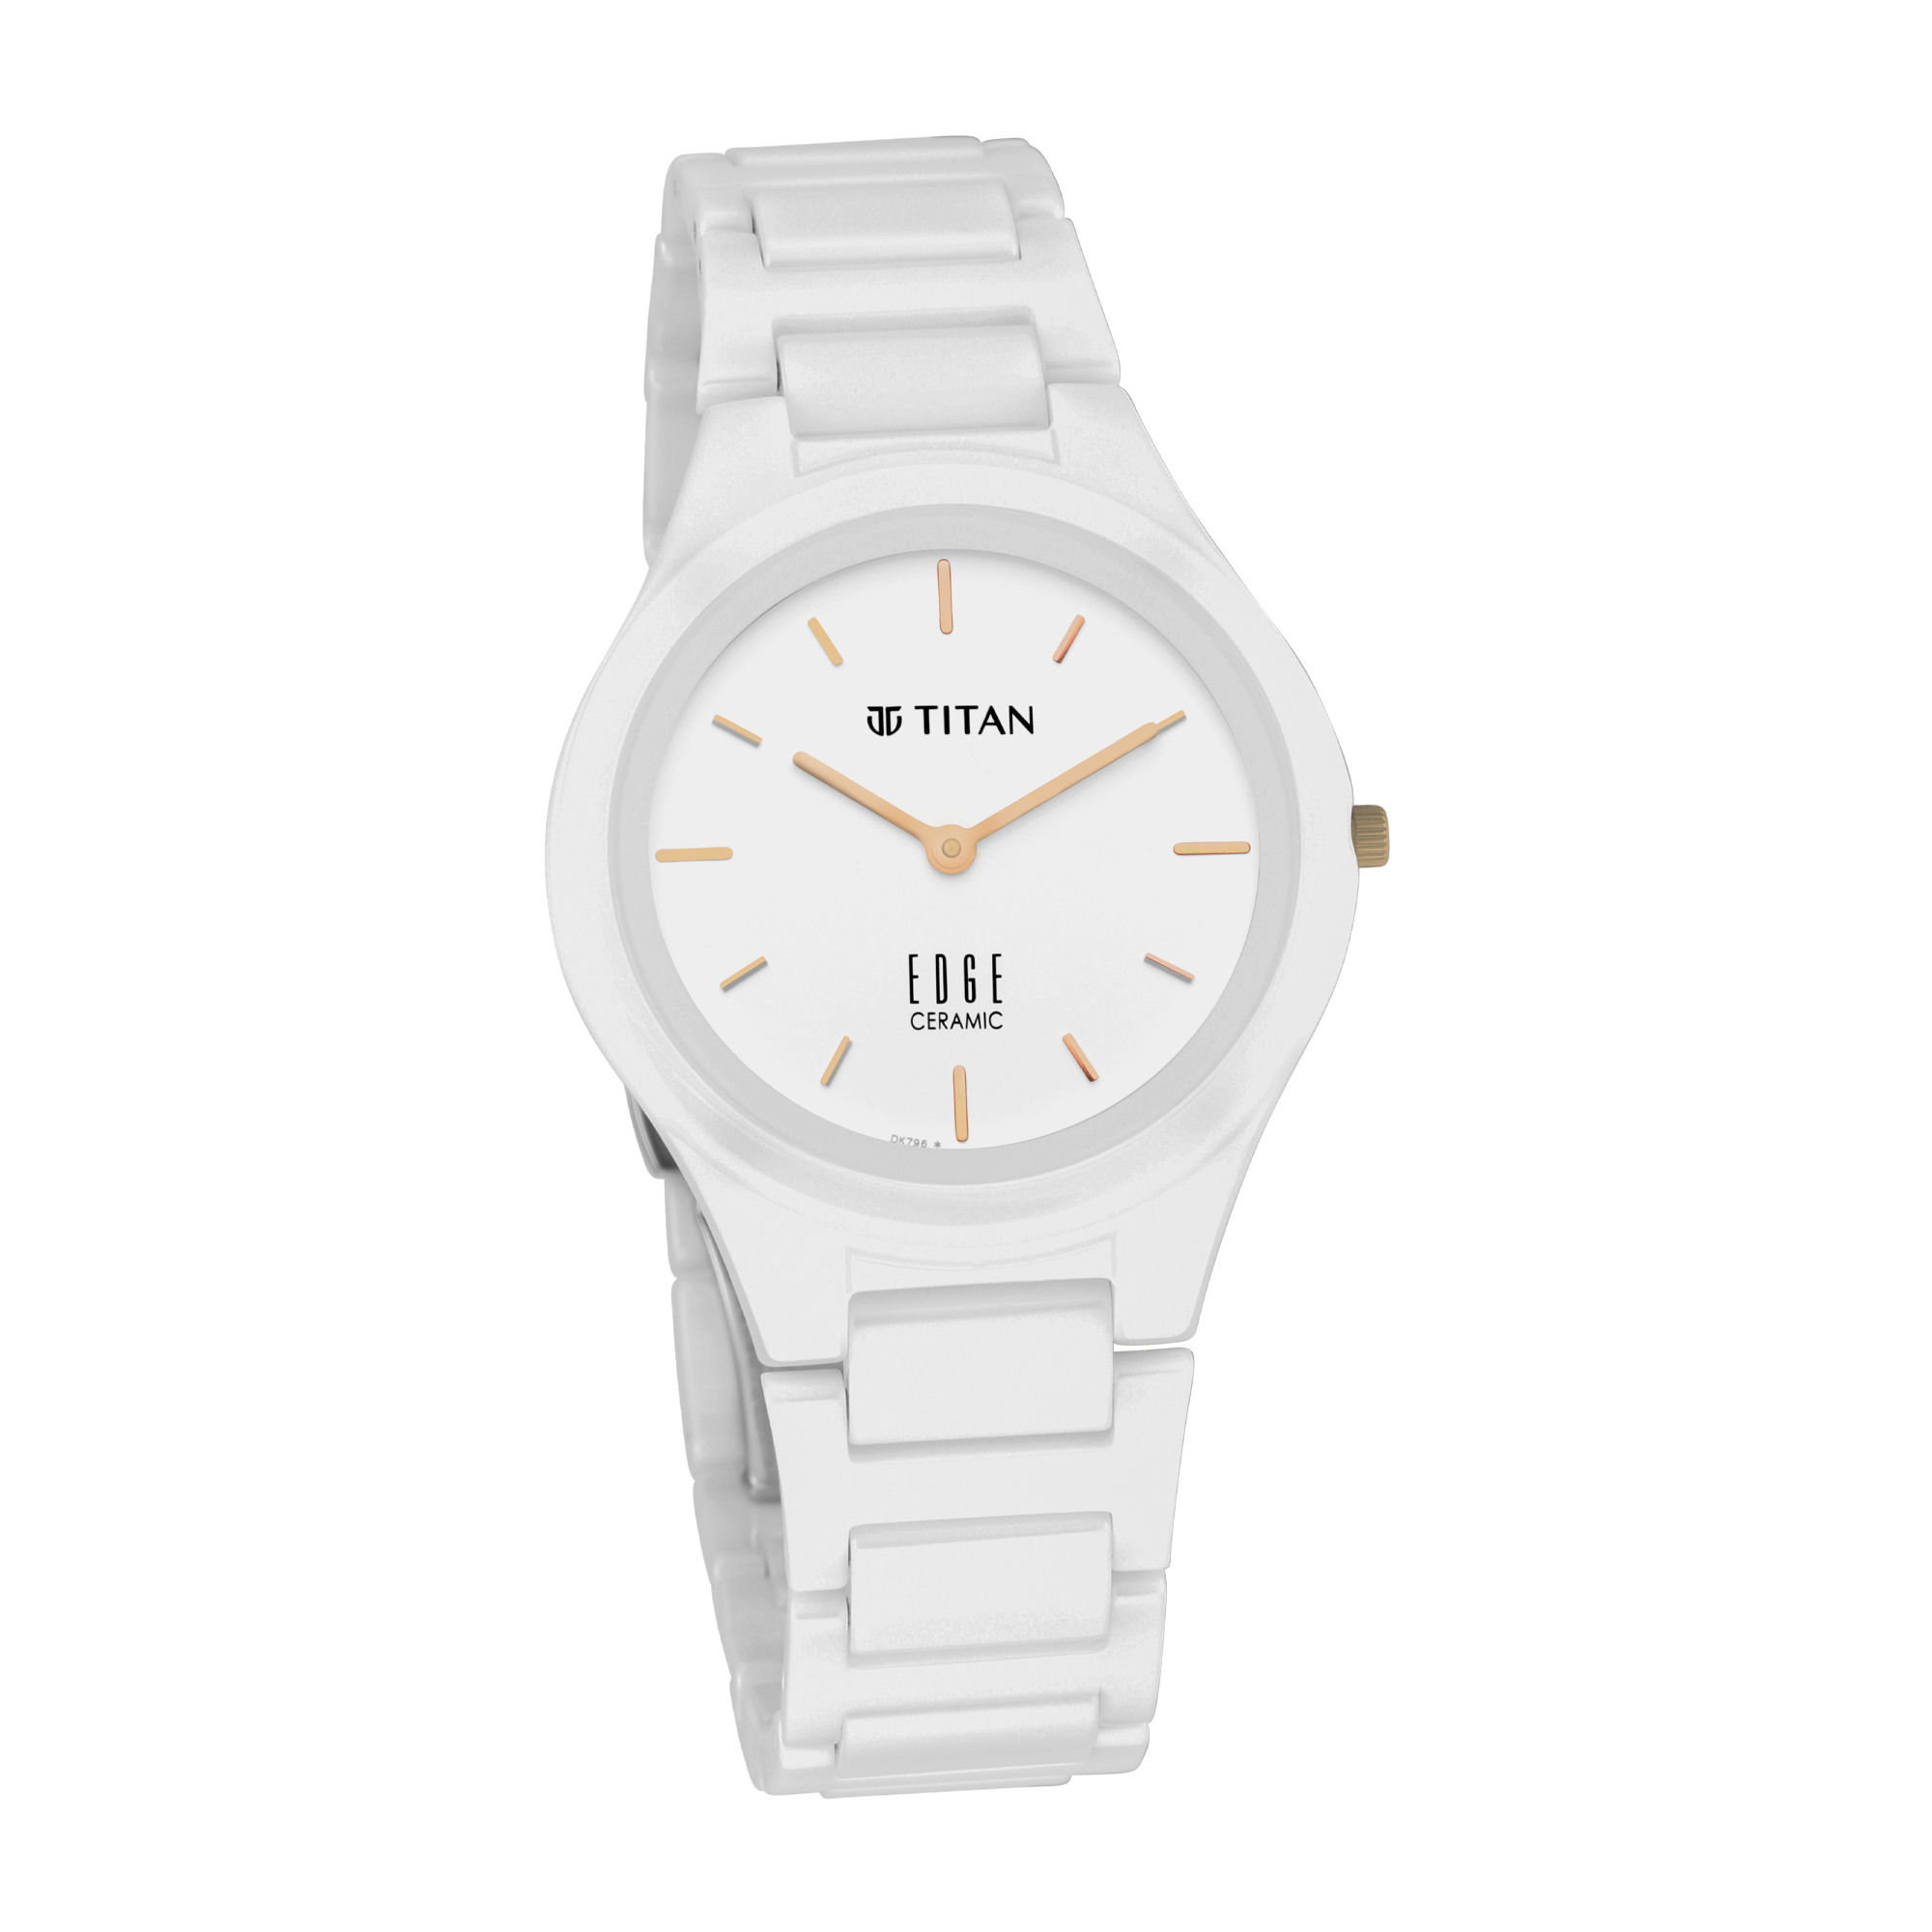 Titan Edge Ceramic 2653Qc04 White Dial Analog Watch For Women: Buy ...